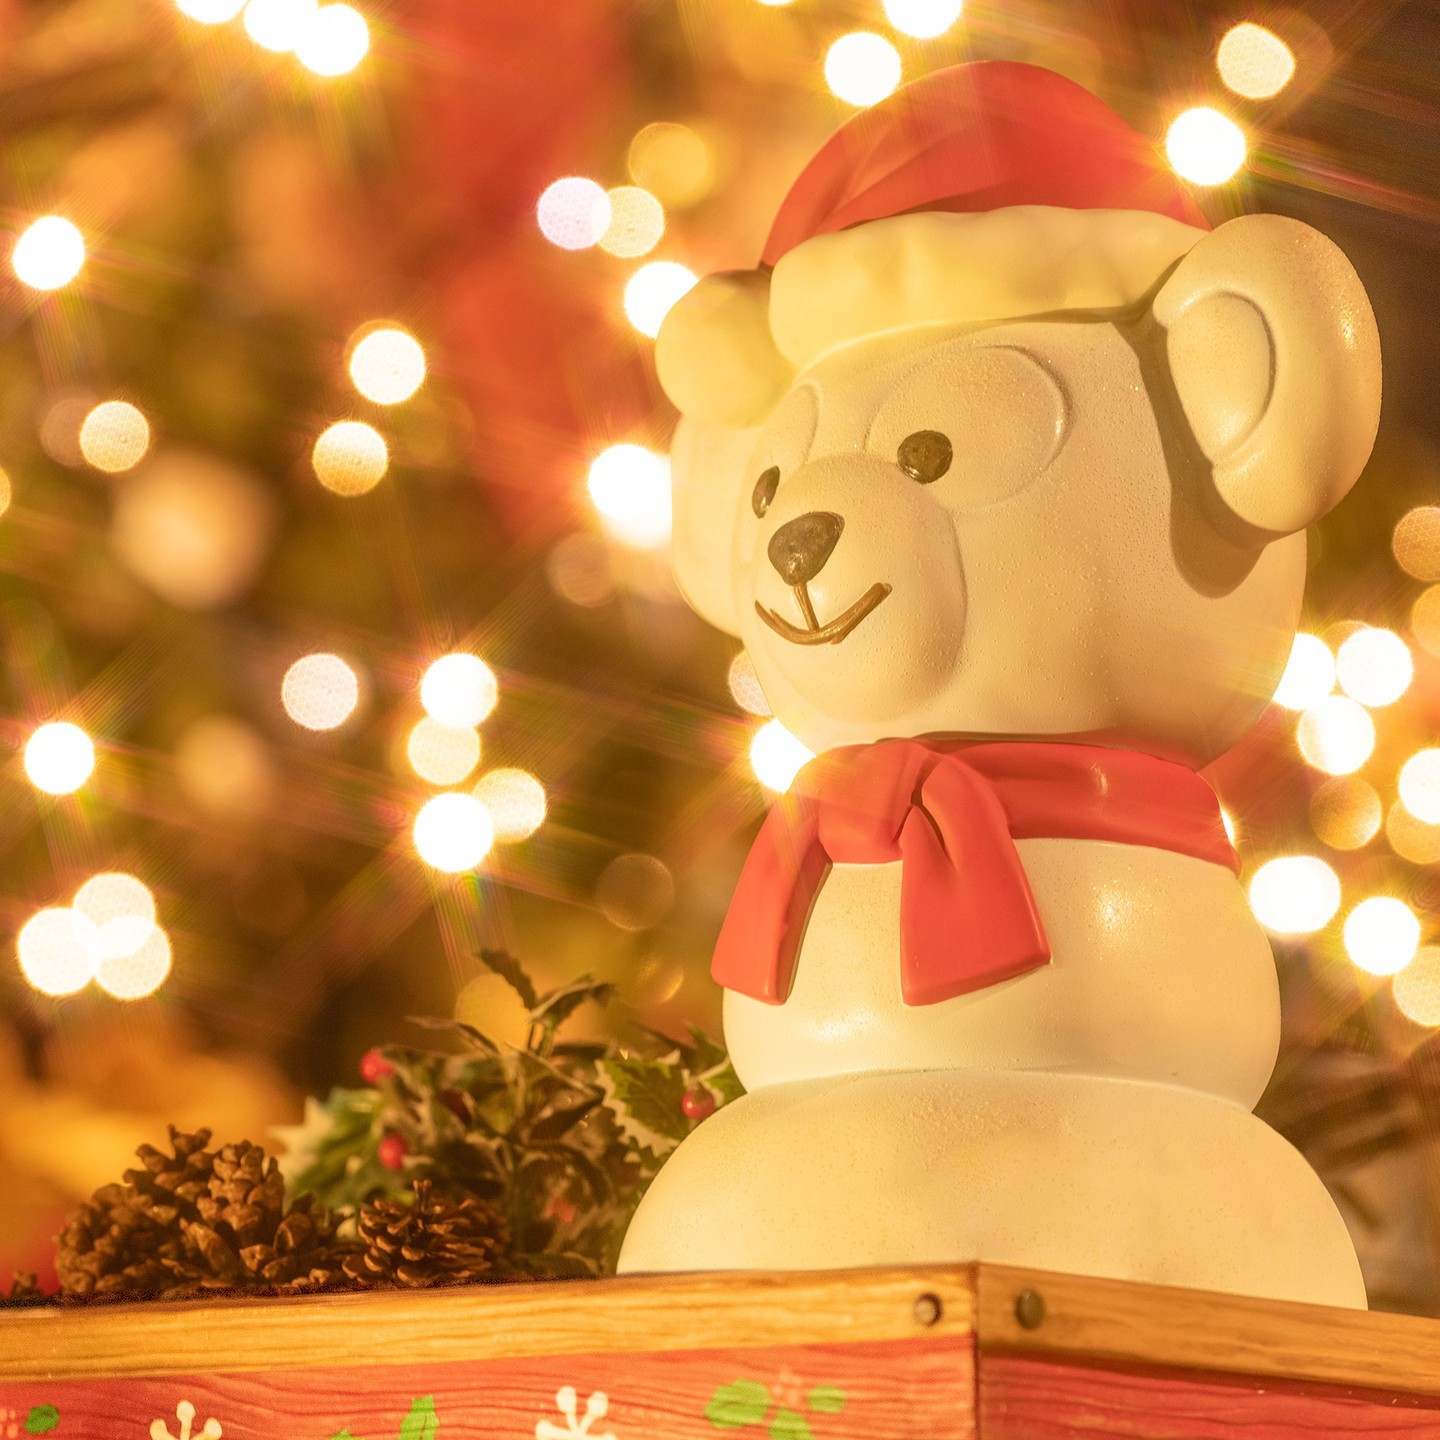 Happy holidays!
素敵なクリスマスを・・・☆
#christmas #duffy #tokyodisneysea #tokyodisneyresort...的圖像